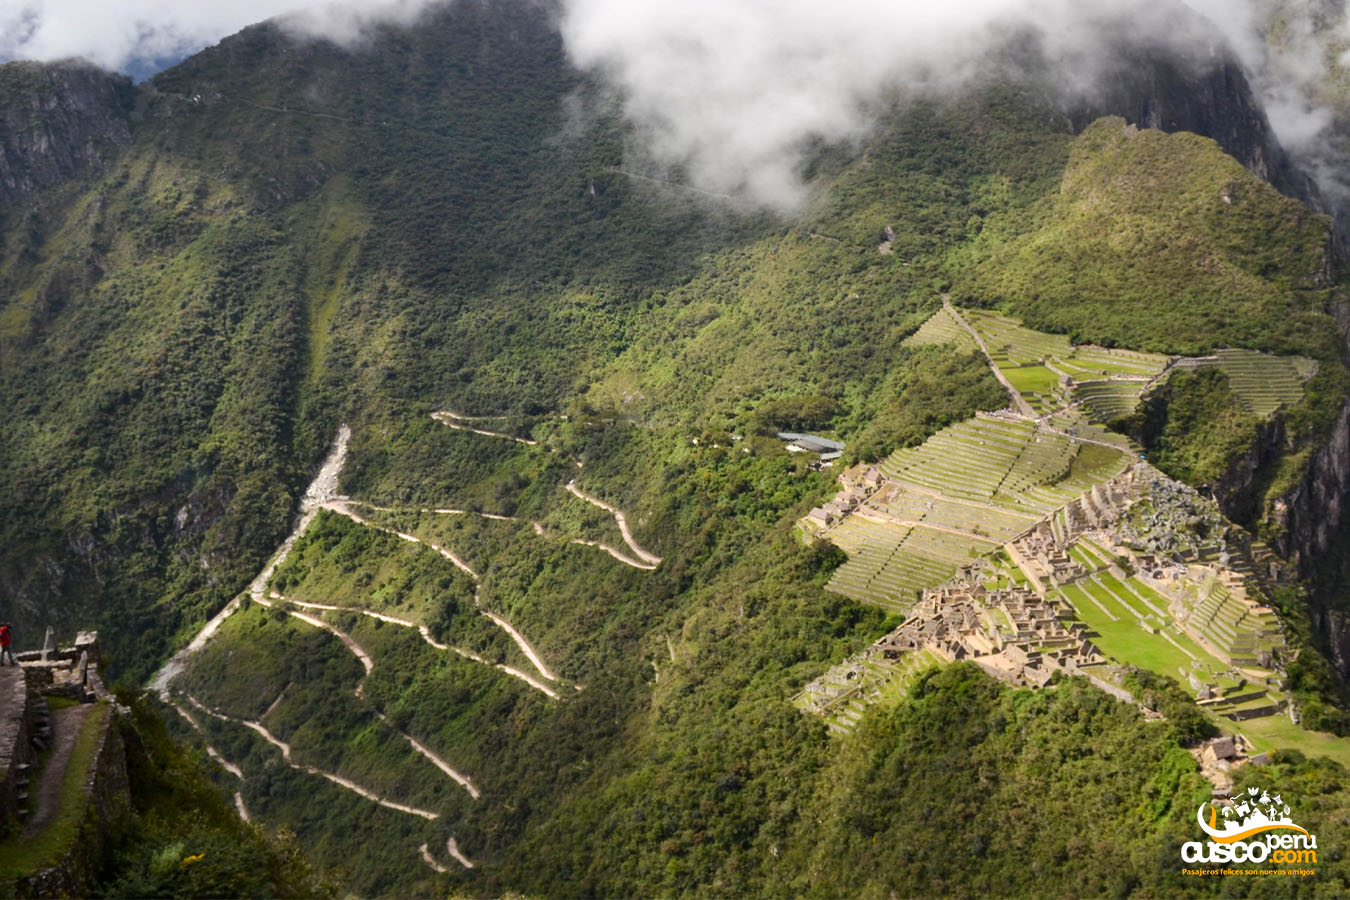 Vista de la carretera Hiram Bingham desde la montaña Huayna Picchu. Fuente: CuscoPeru.com